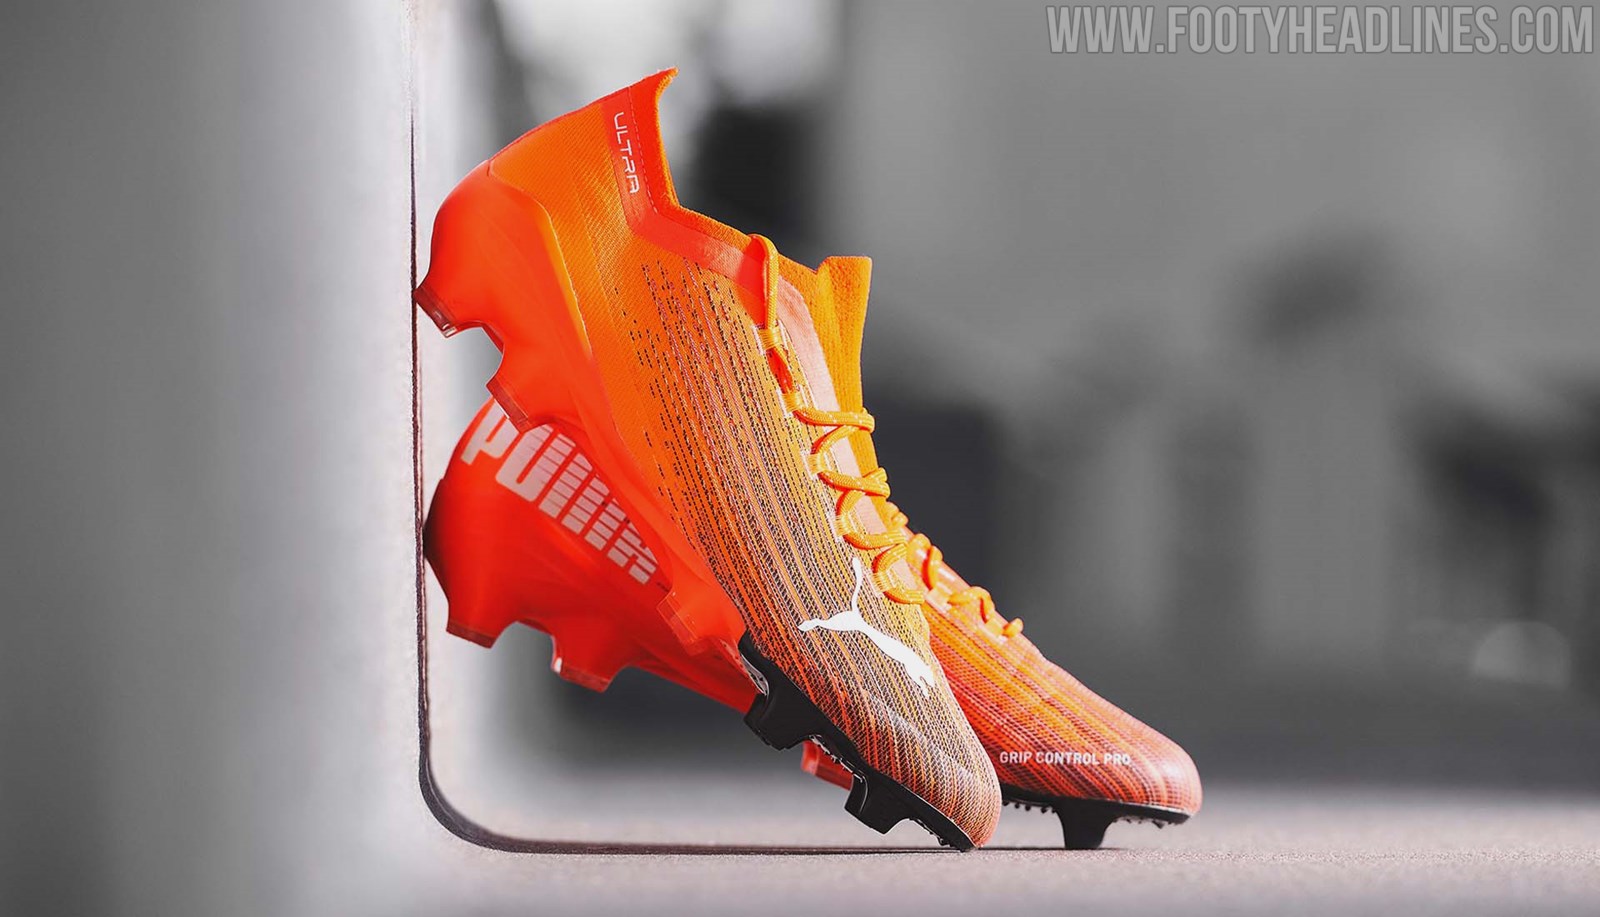 Neymar To Wear Puma Ultra Boots? - Footy Headlines